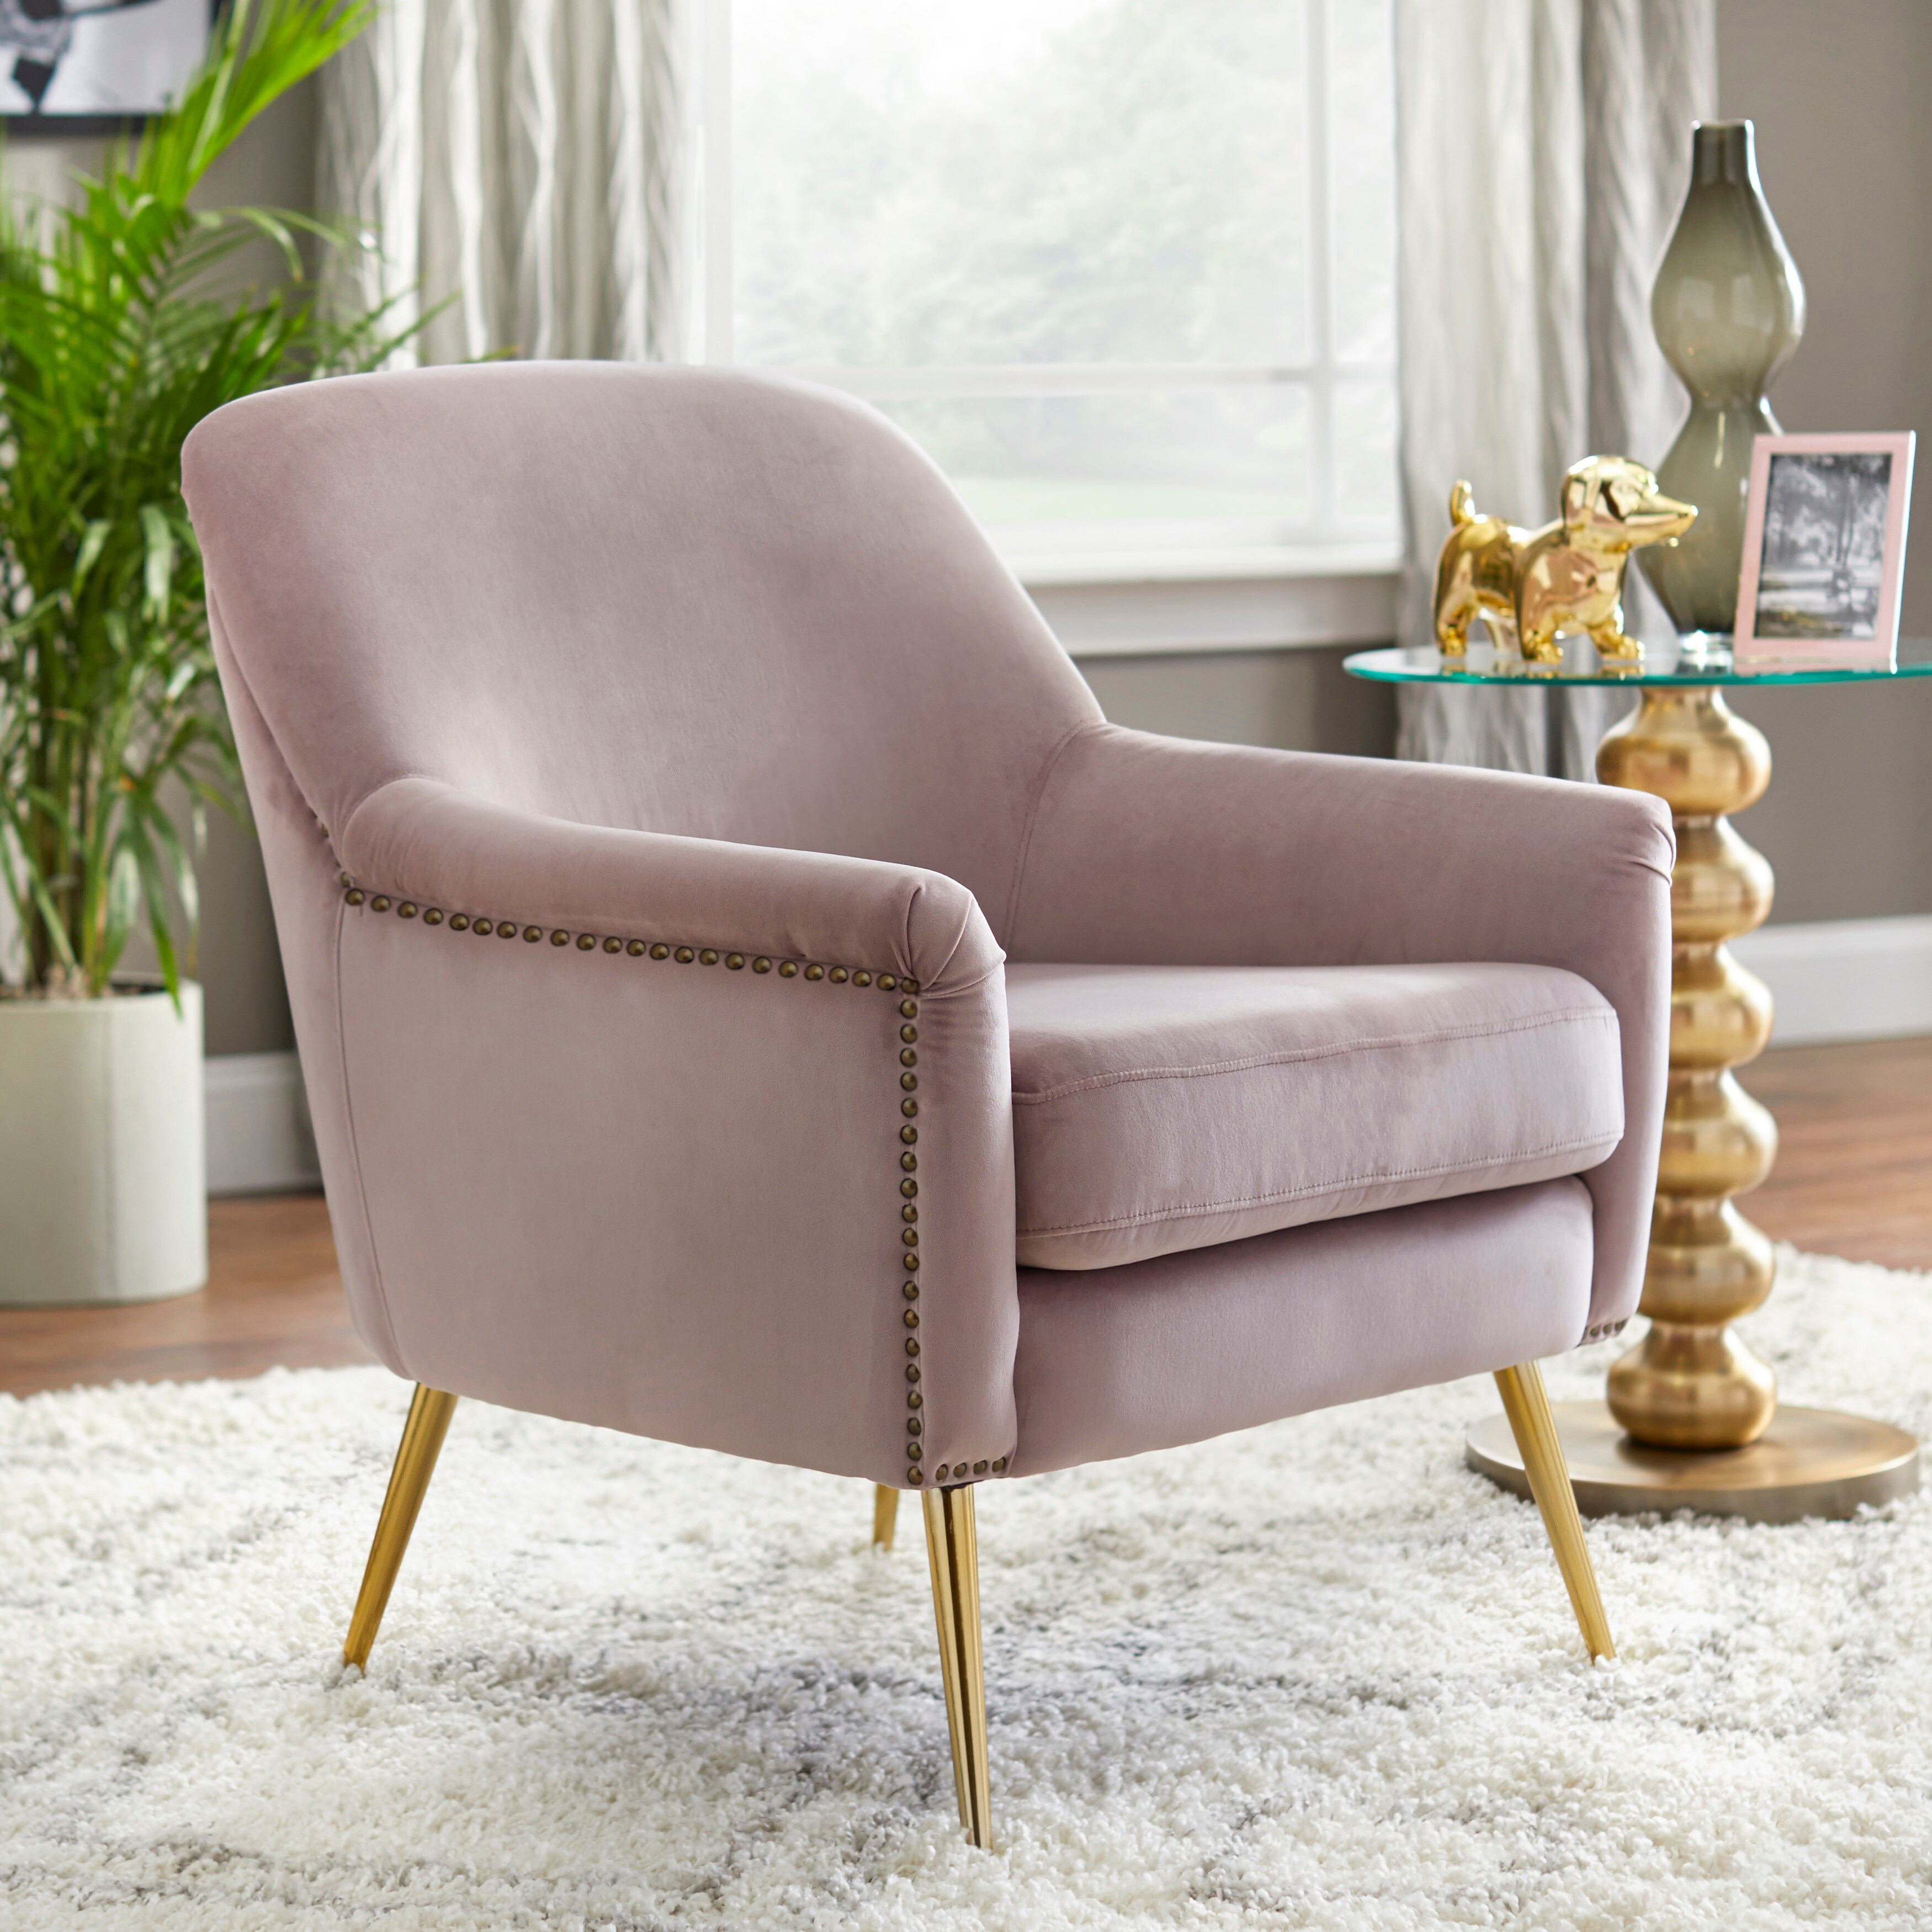 Lifestorey Vita Mid-century Upholstered Accent Chair